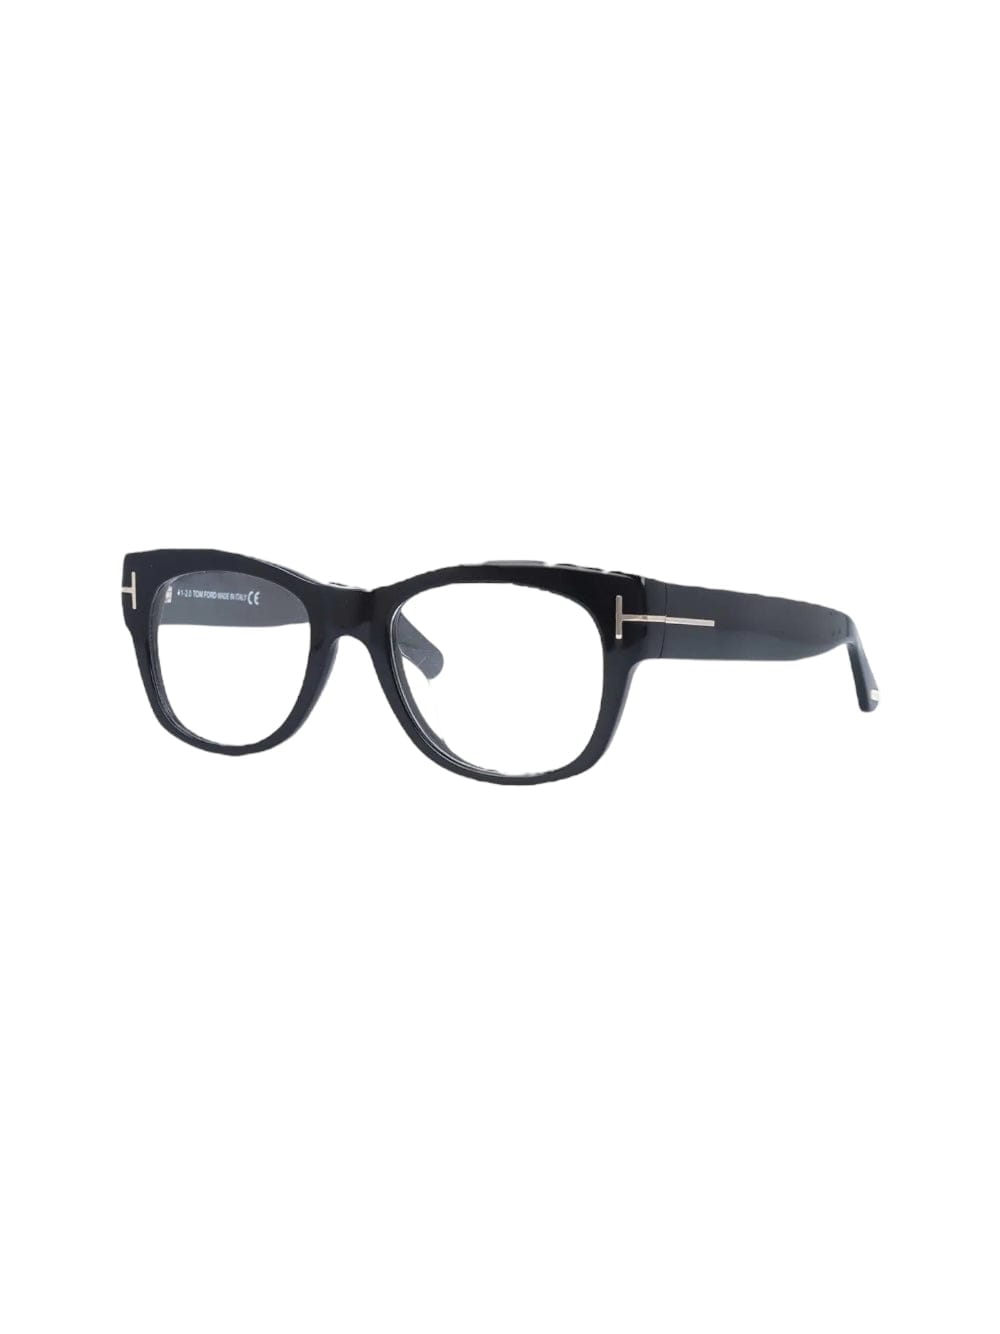 Tom Ford Tf 5040 - Black Glasses